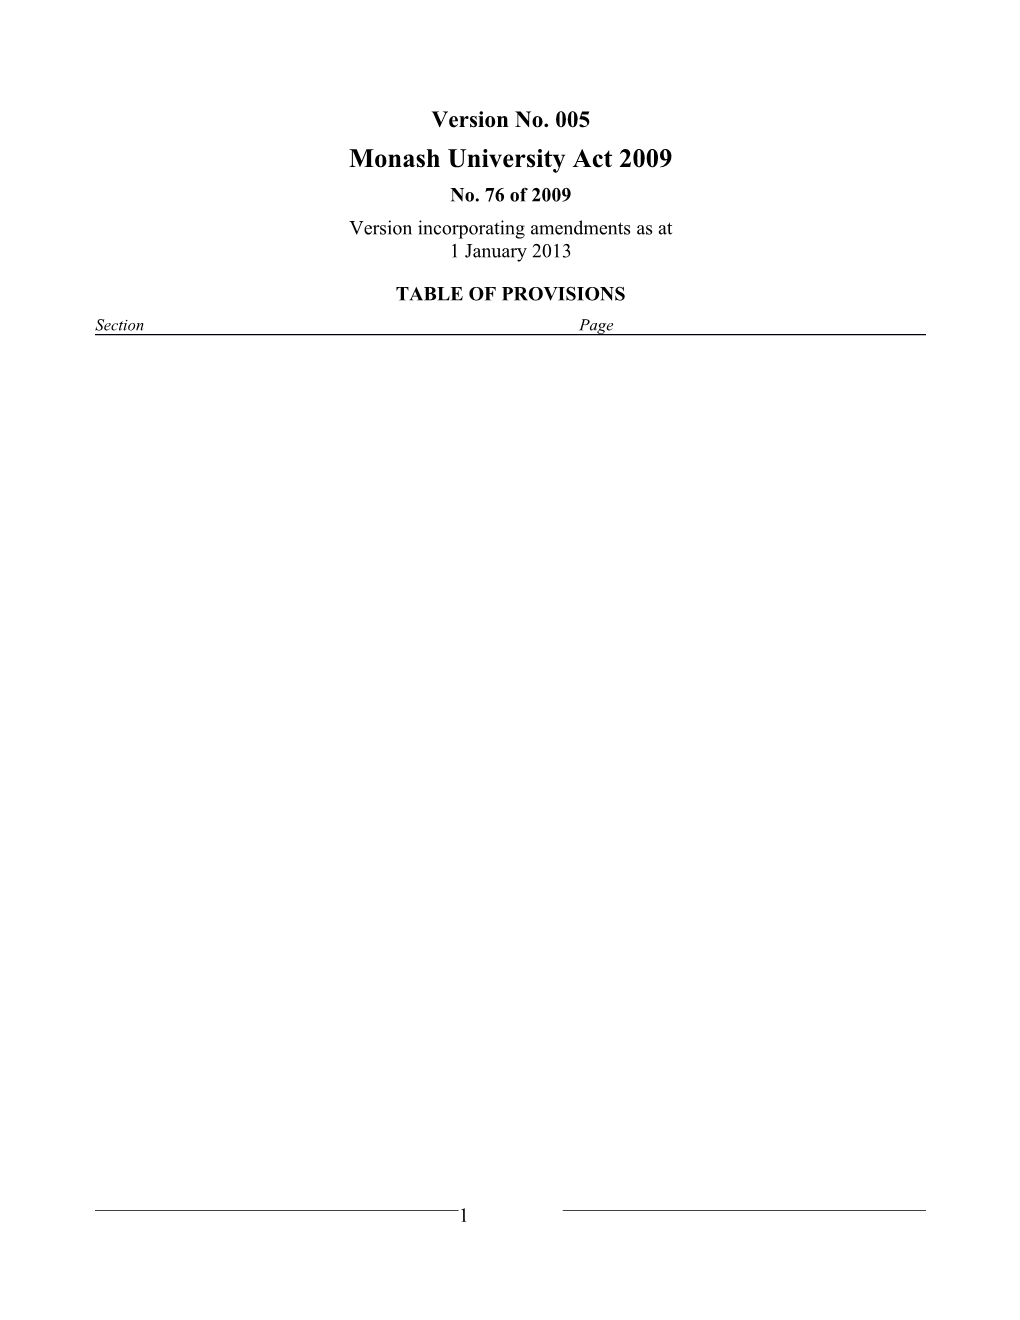 Monash University Act 2009